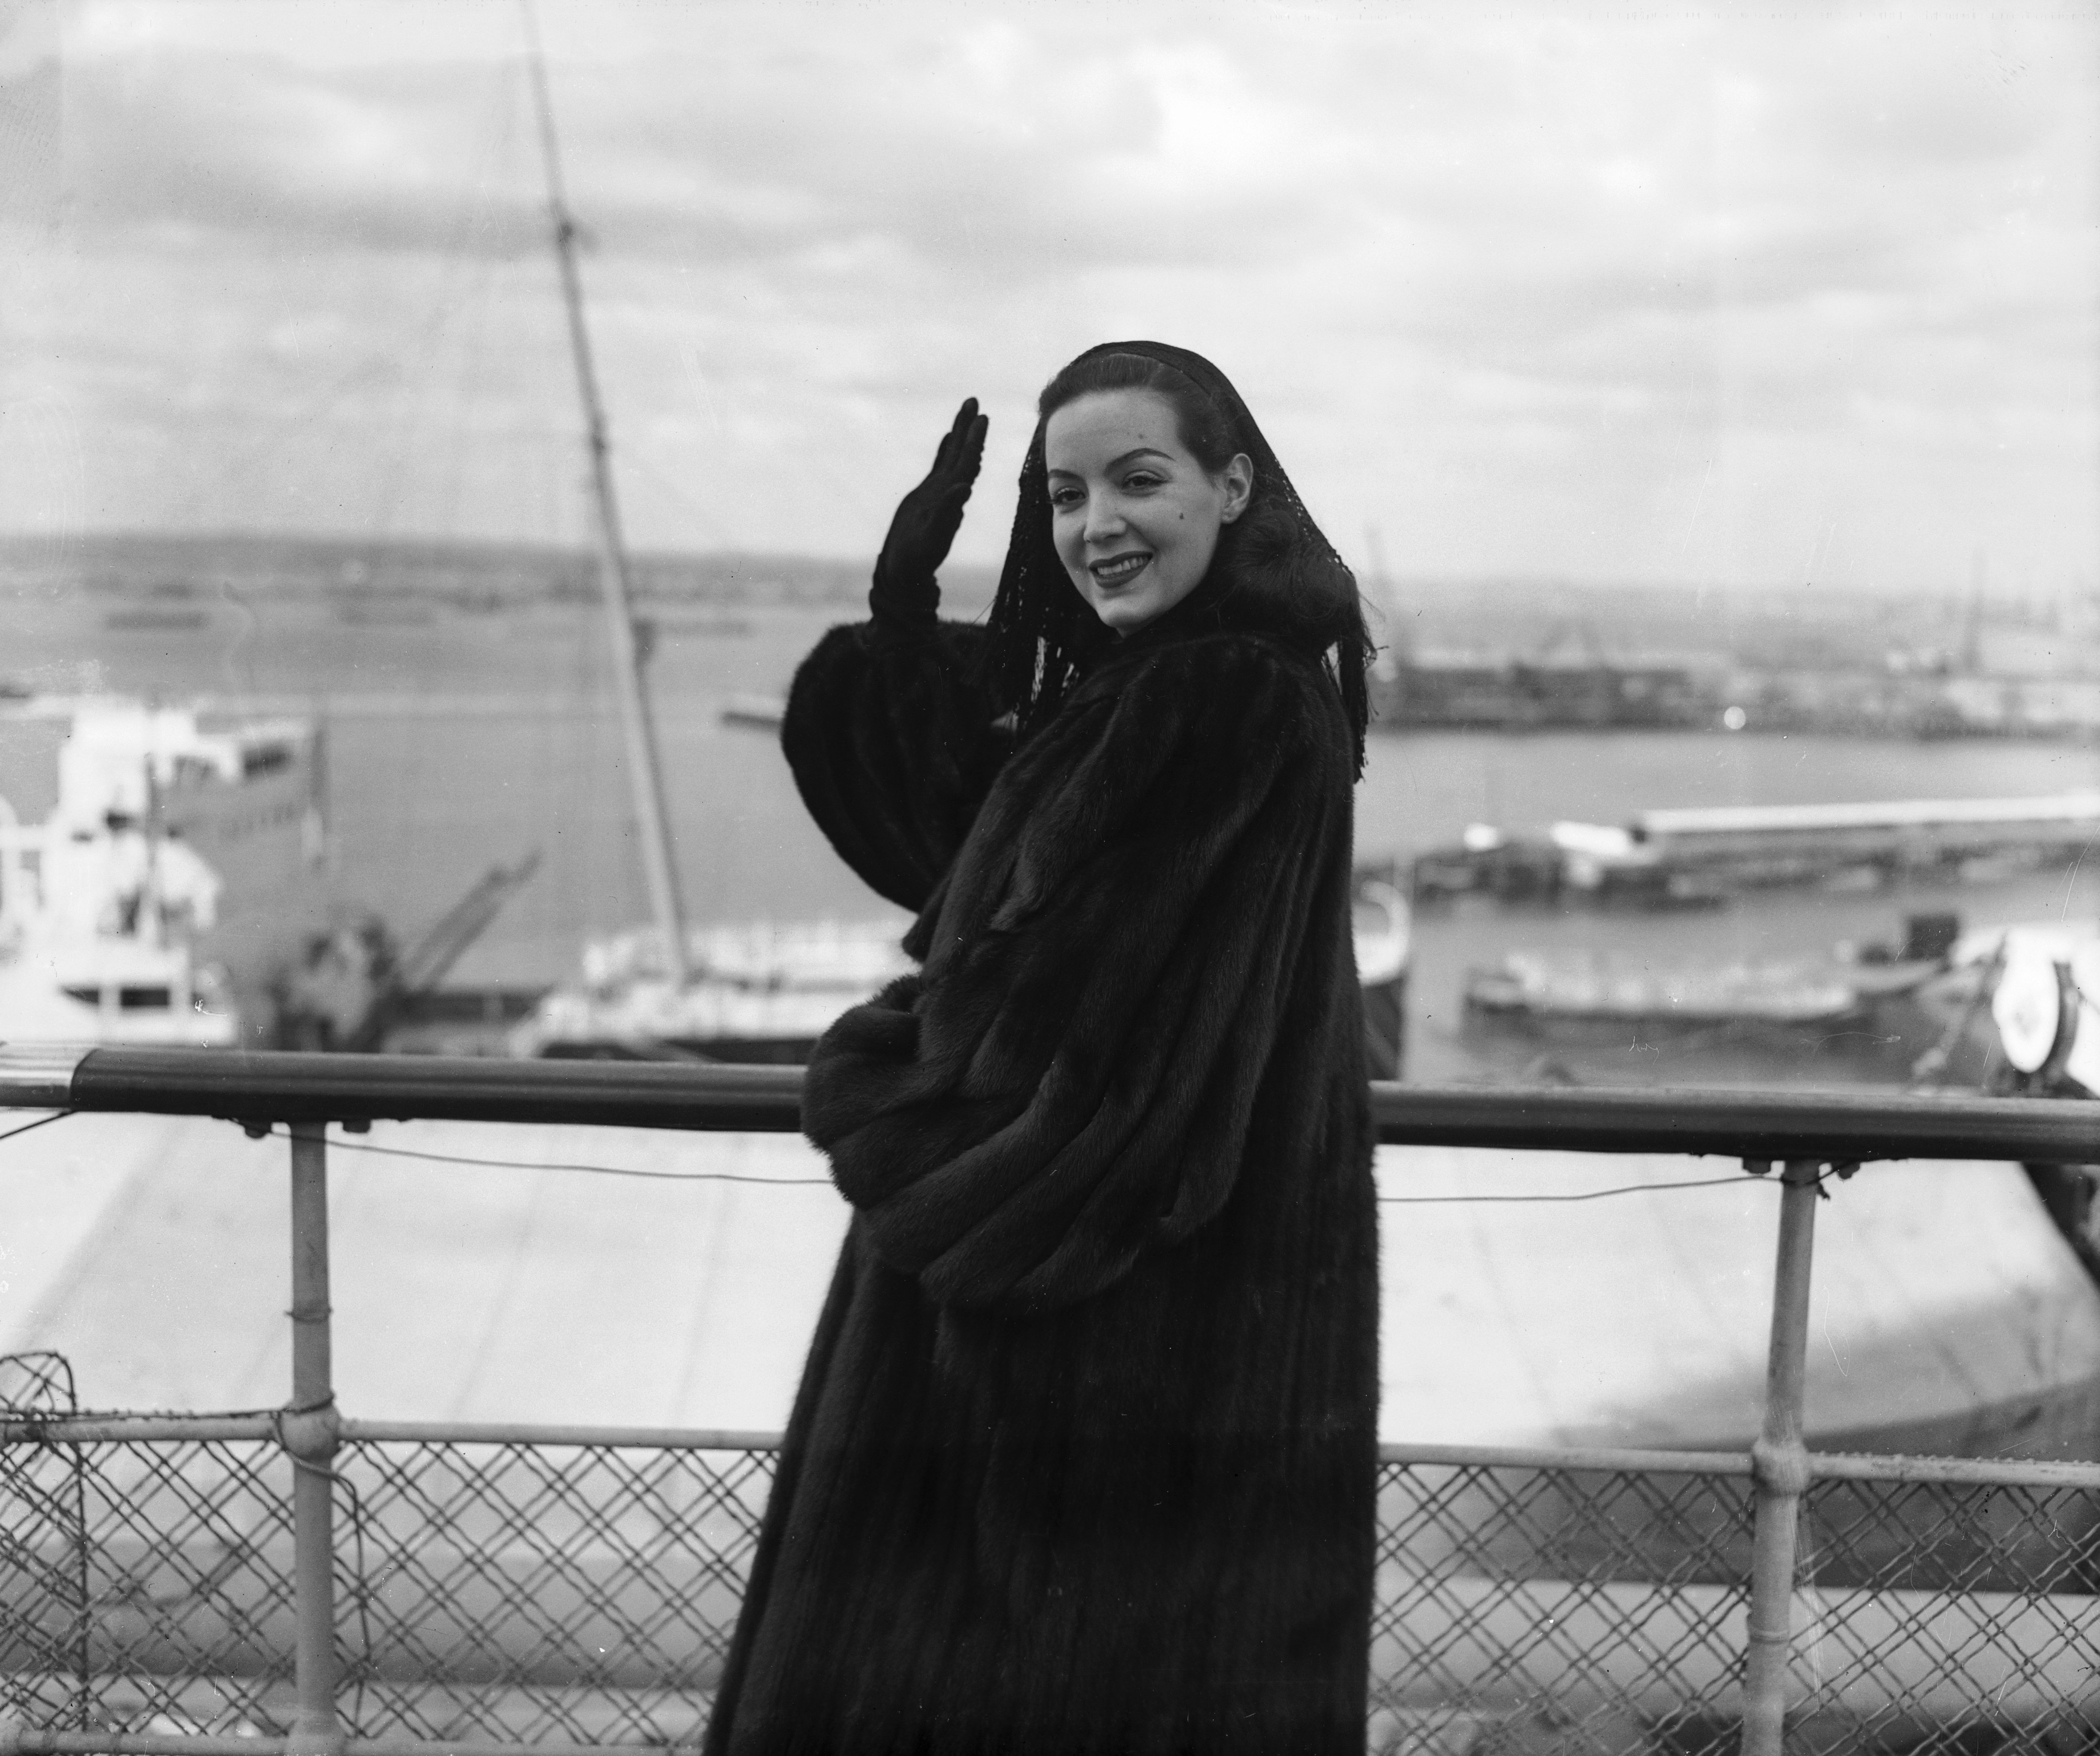 Maria Félix deja Southampton rumbo a Estados Unidos a bordo del SS Queen Elizabeth. | Foto: Getty Images